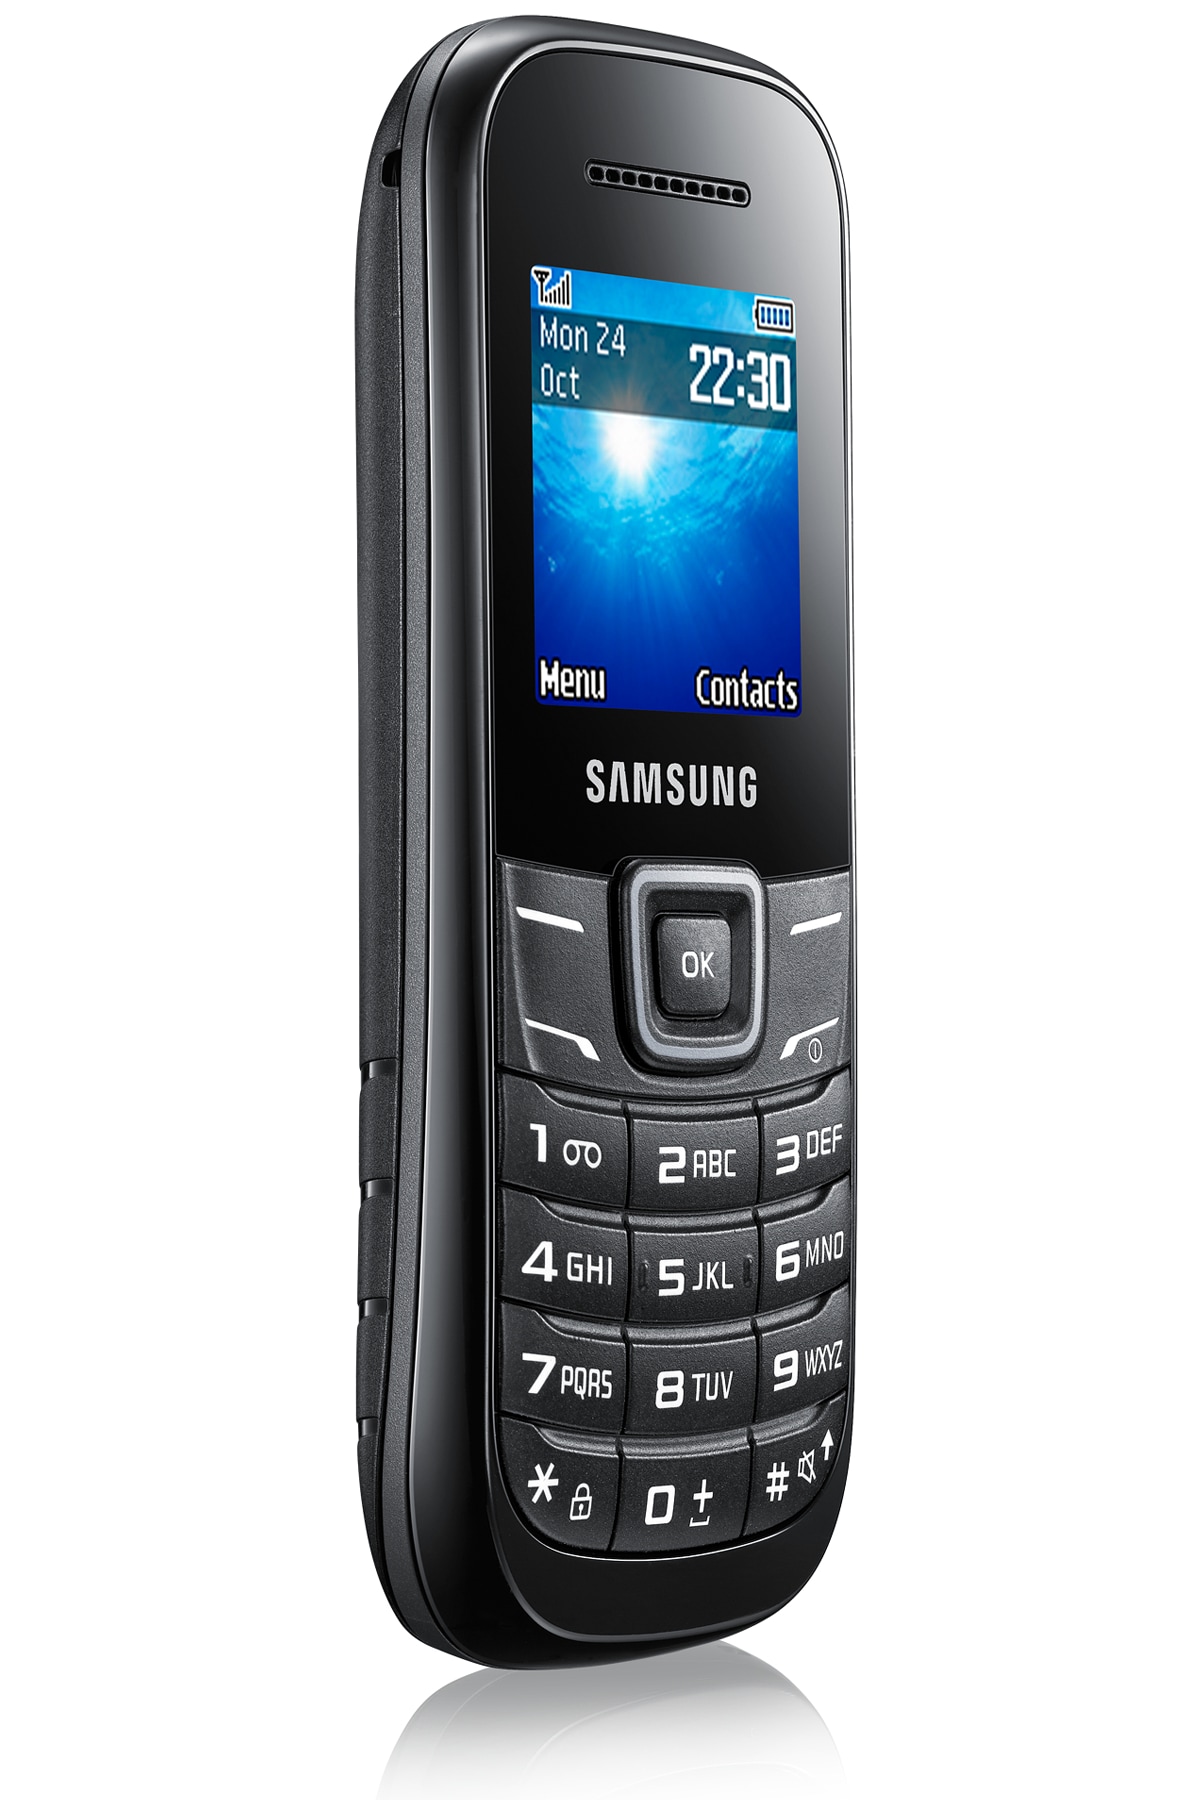 Samsung Gt E1200 Network Unlock Code Free